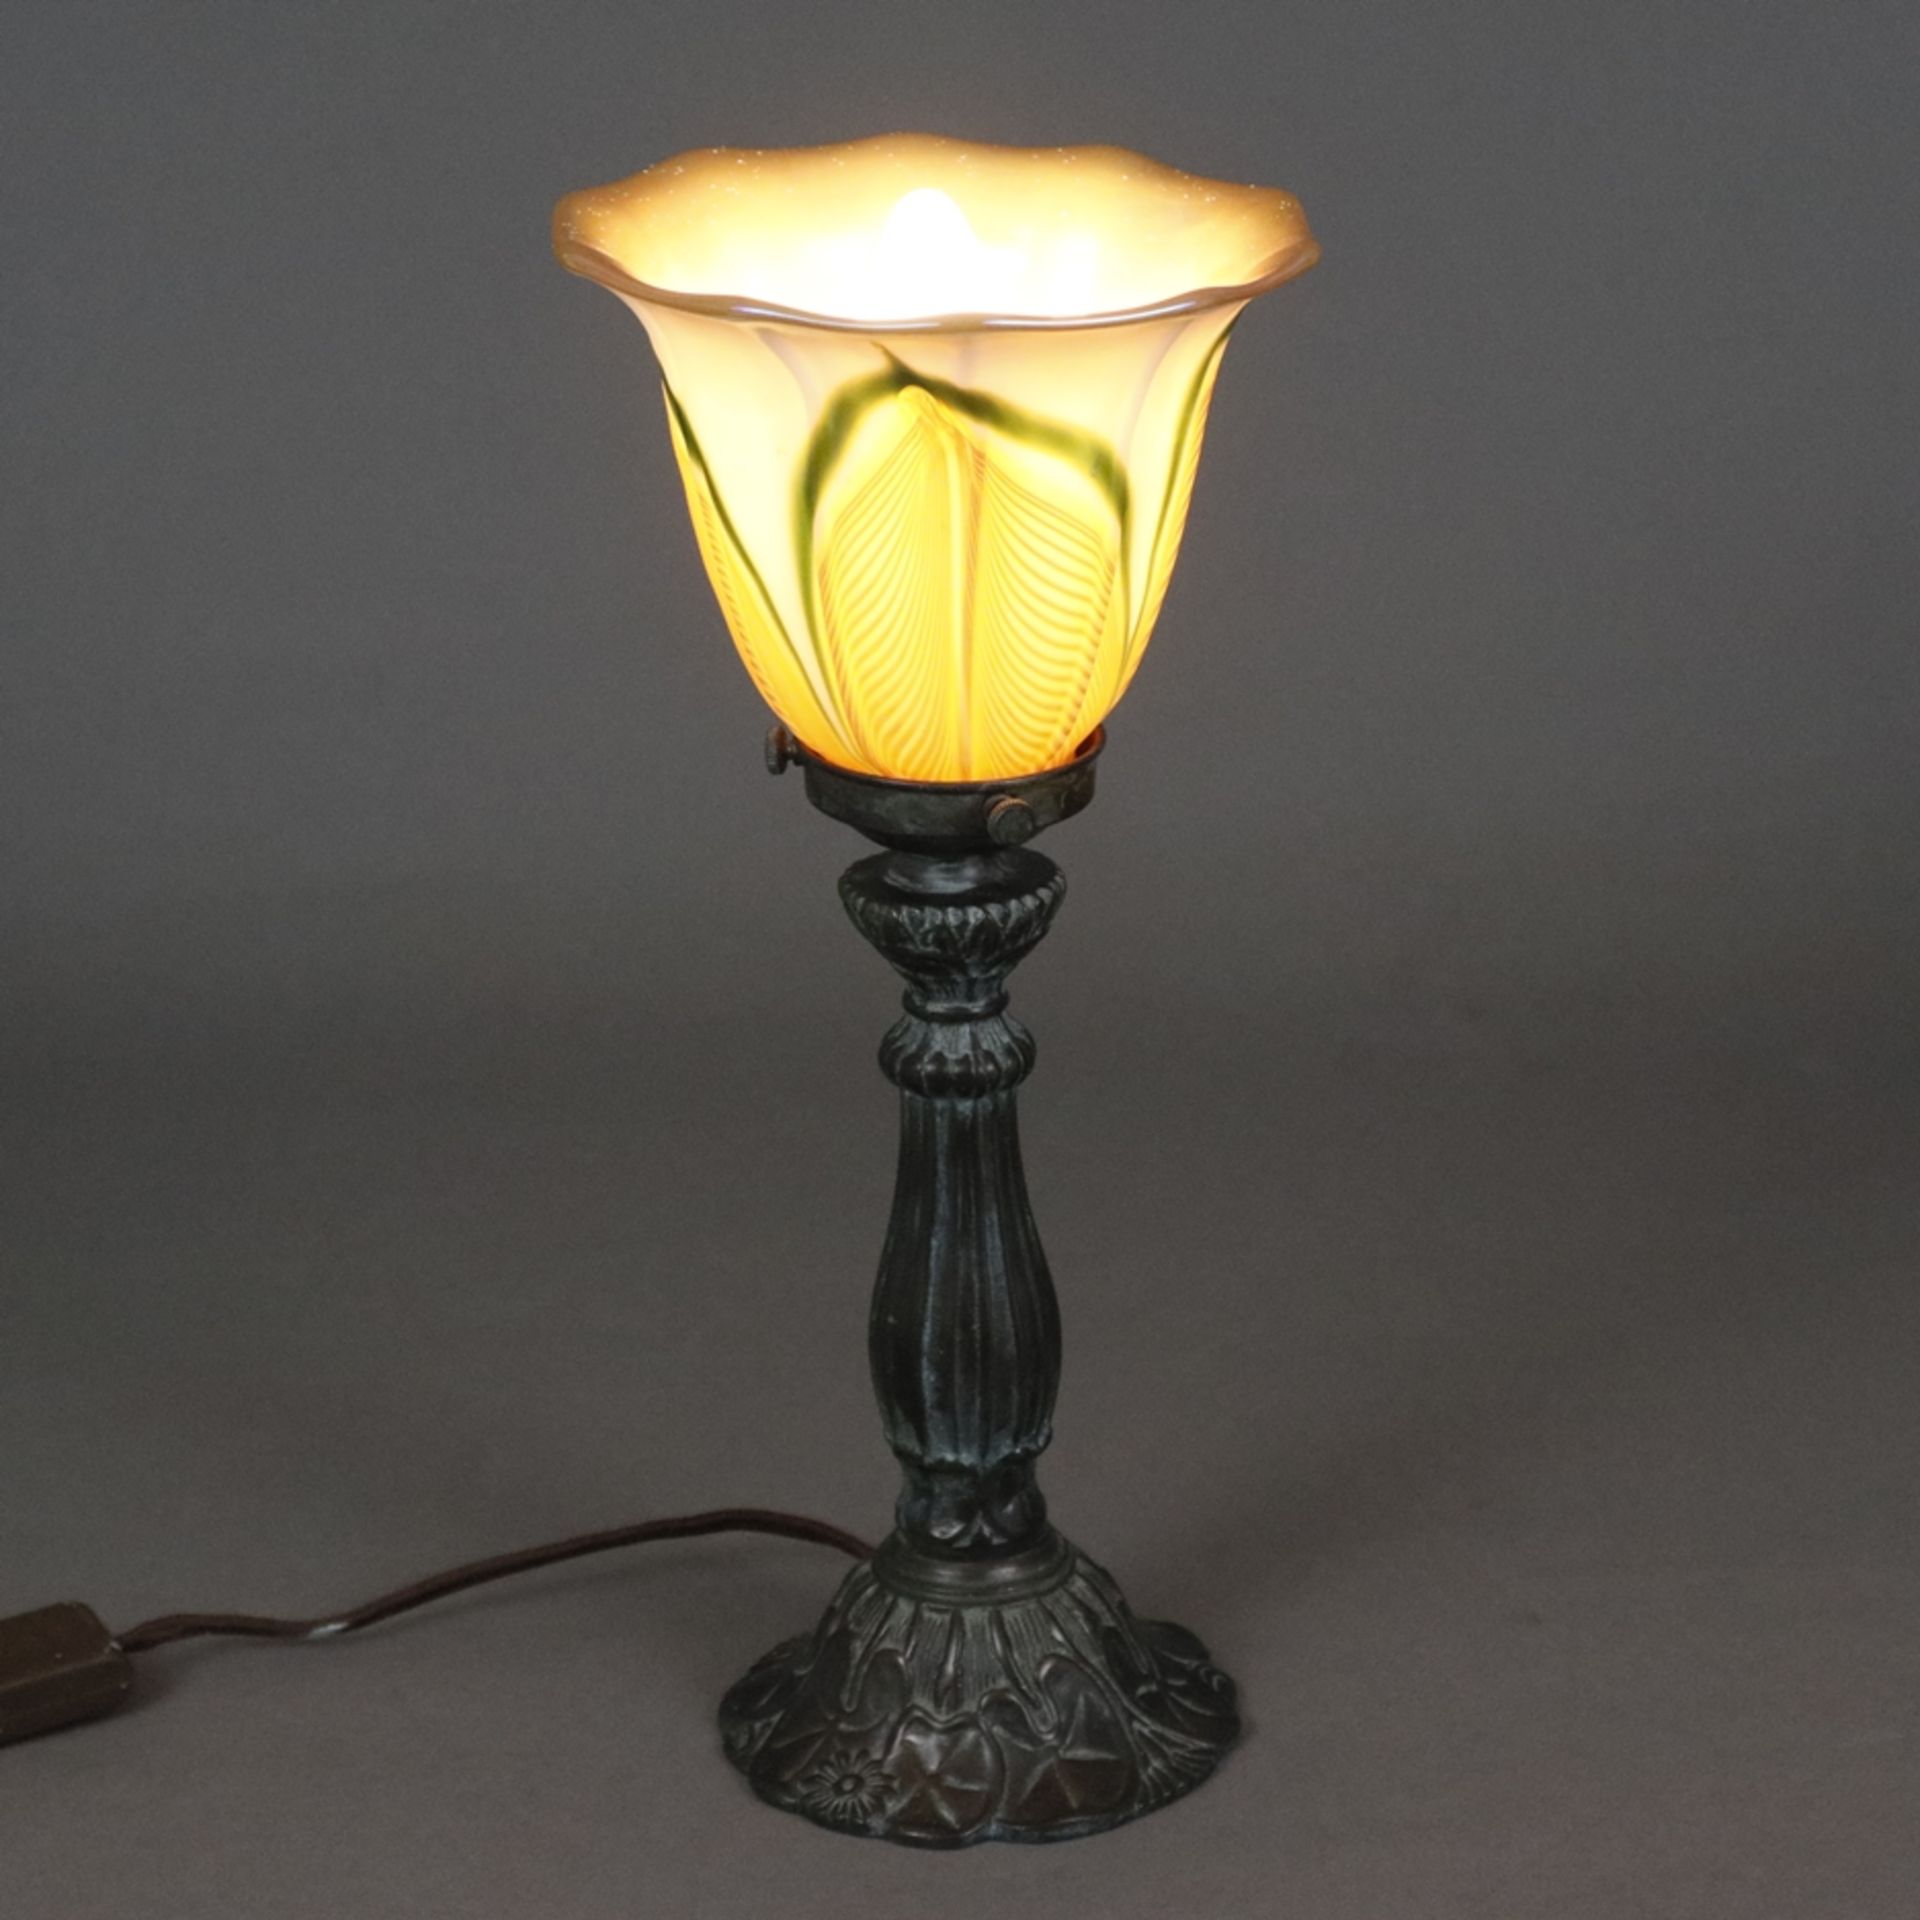 Jugendstil Tischlampe - um 1900/10, floral reliefierter Metallfuß, bronziert, glockenförmiger Glass - Image 7 of 7